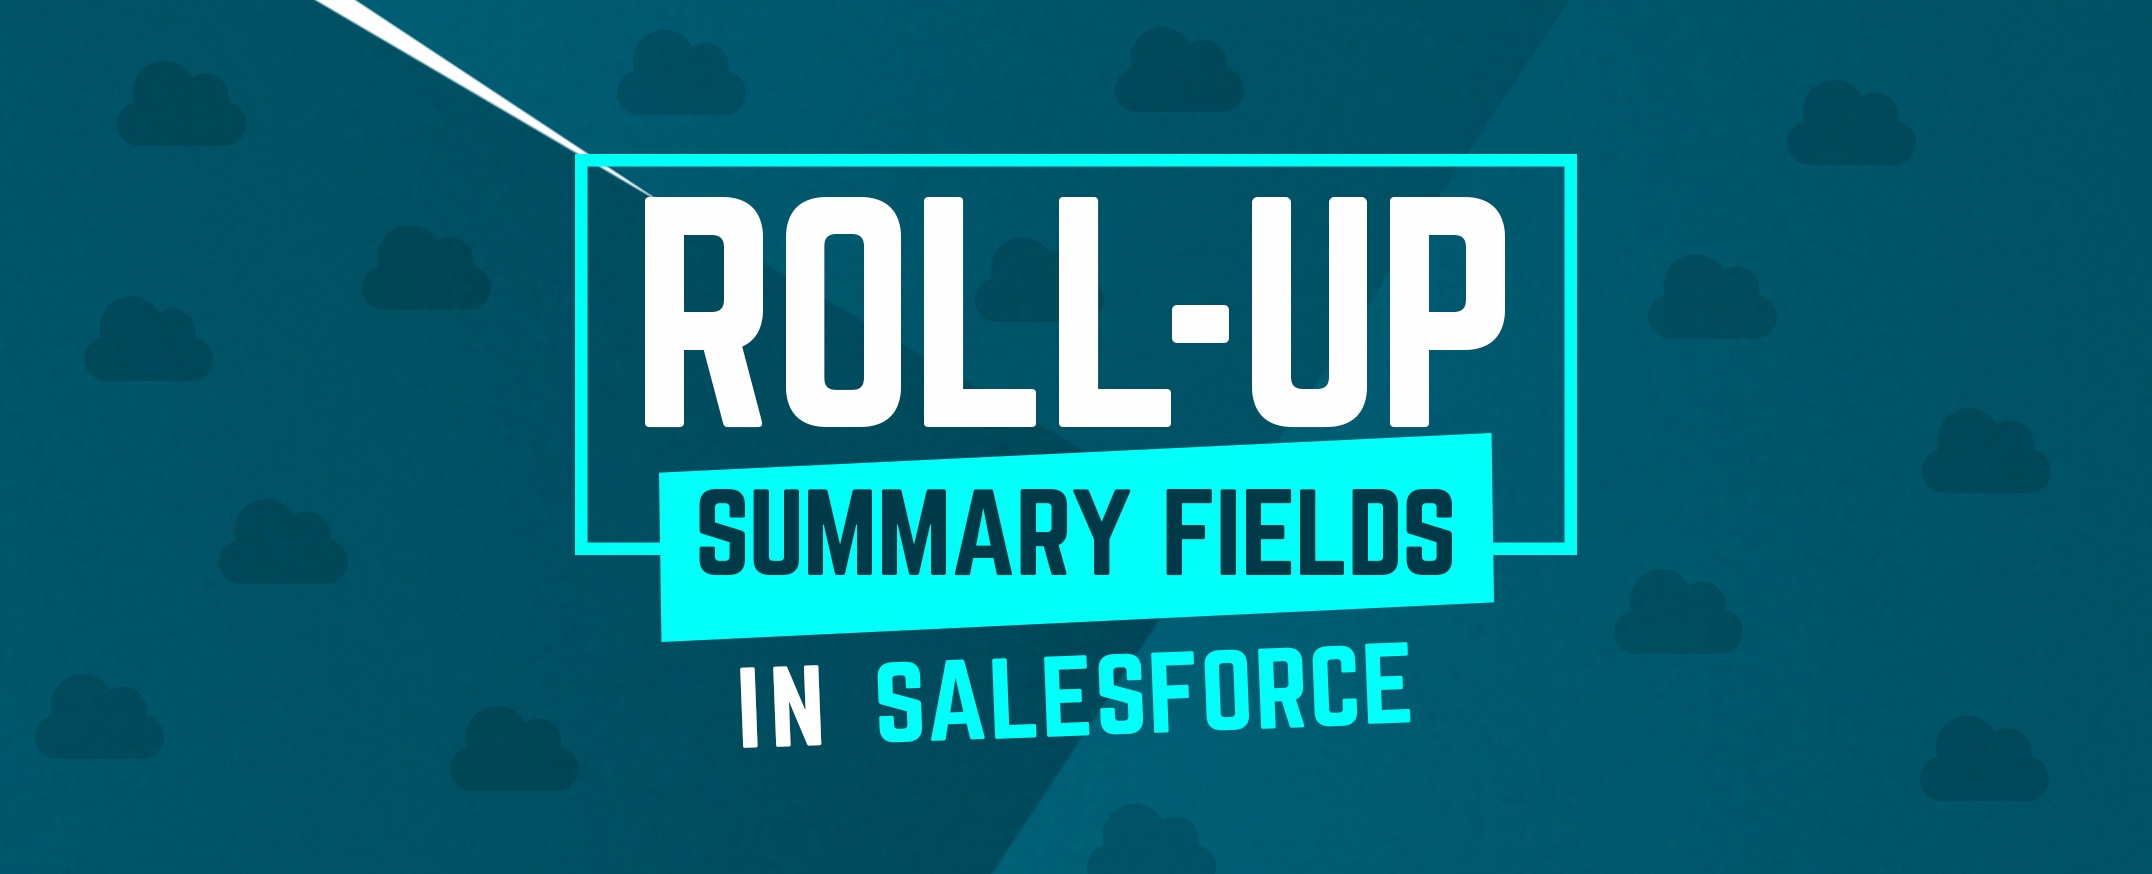 Rollup summary field salesforce